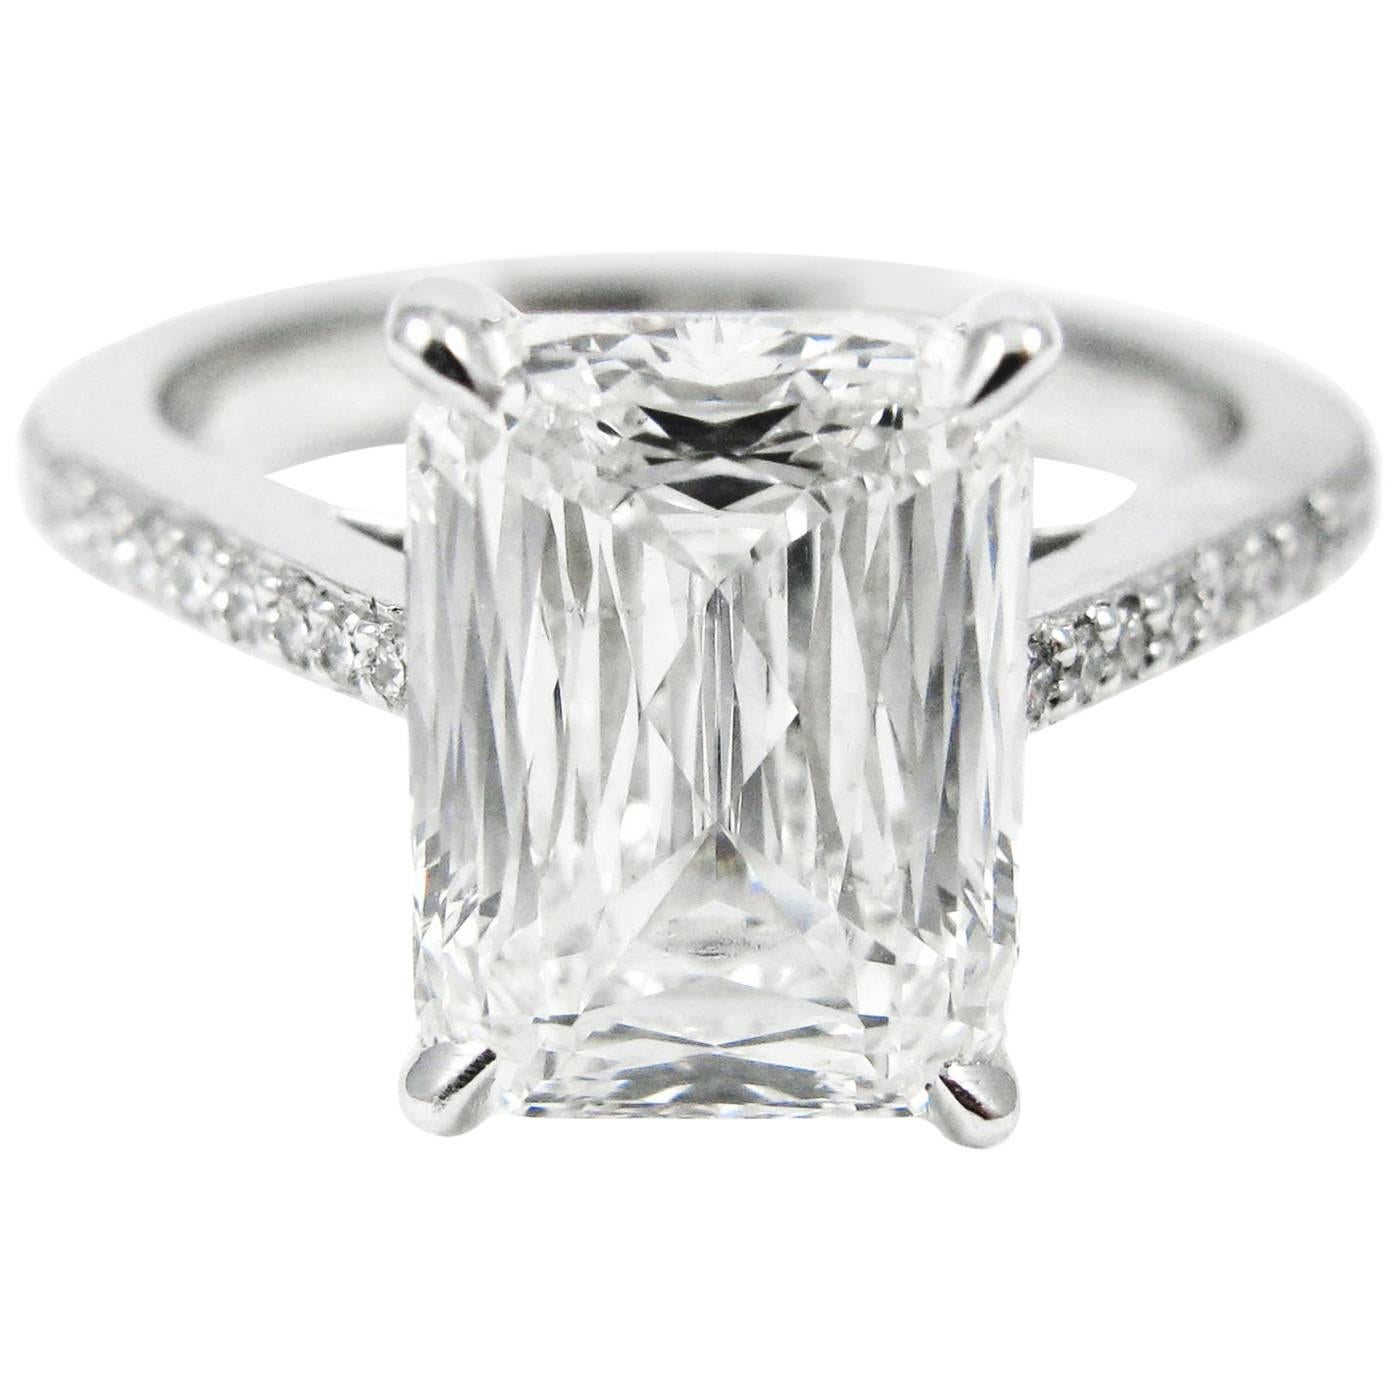 GIA Certified 3.27 Carat Crisscut Diamond Platinum Pave Engagement Ring